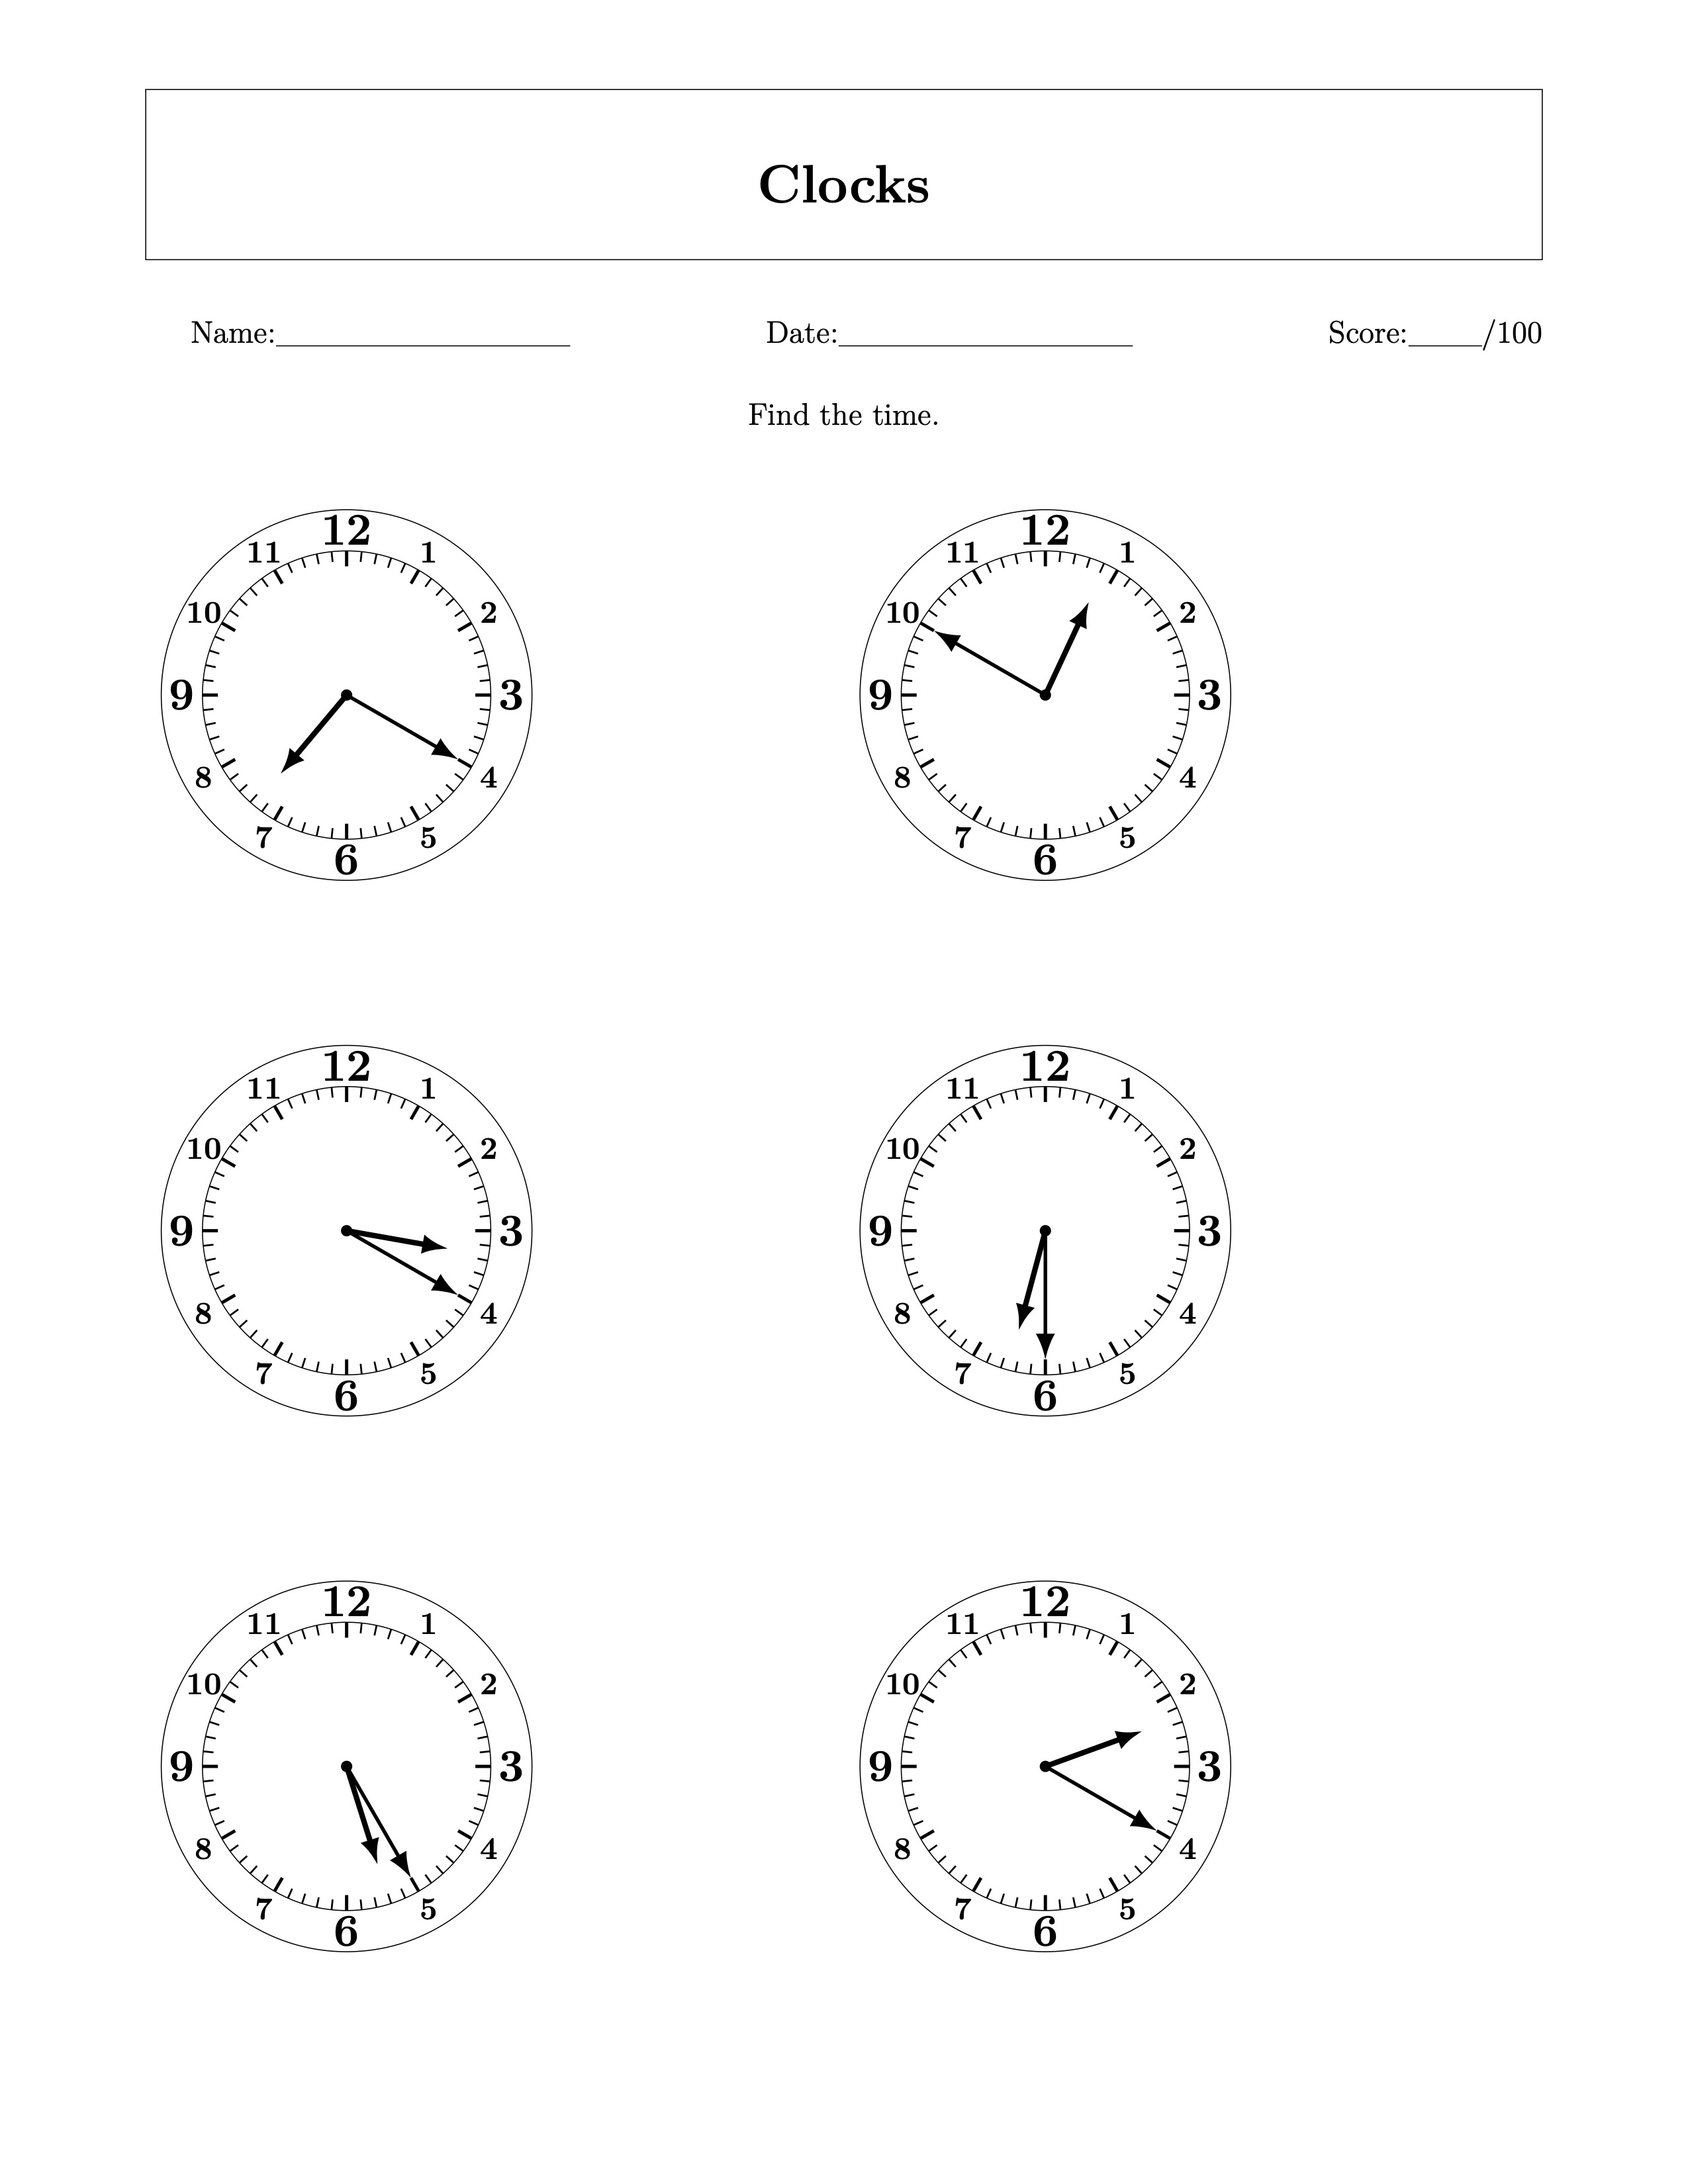 Clocks Worksheet